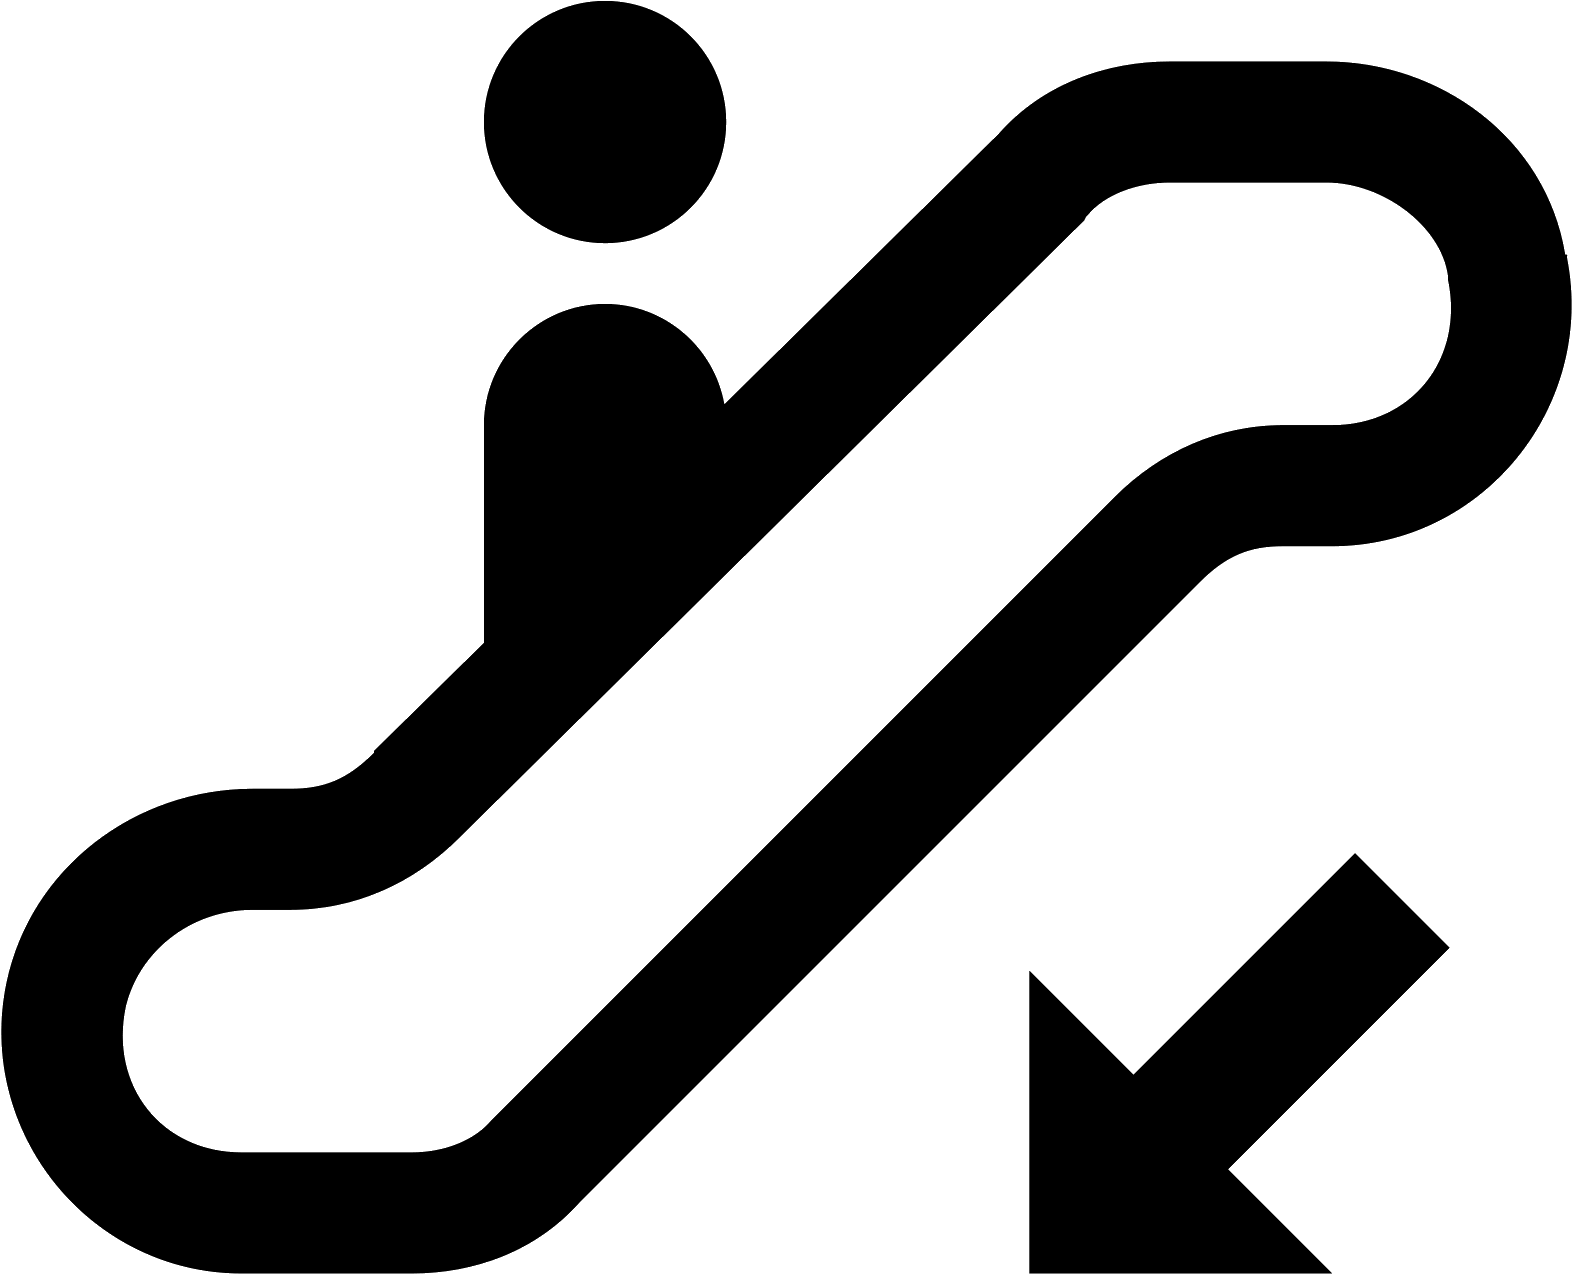 Escalator Symbol Graphic PNG image